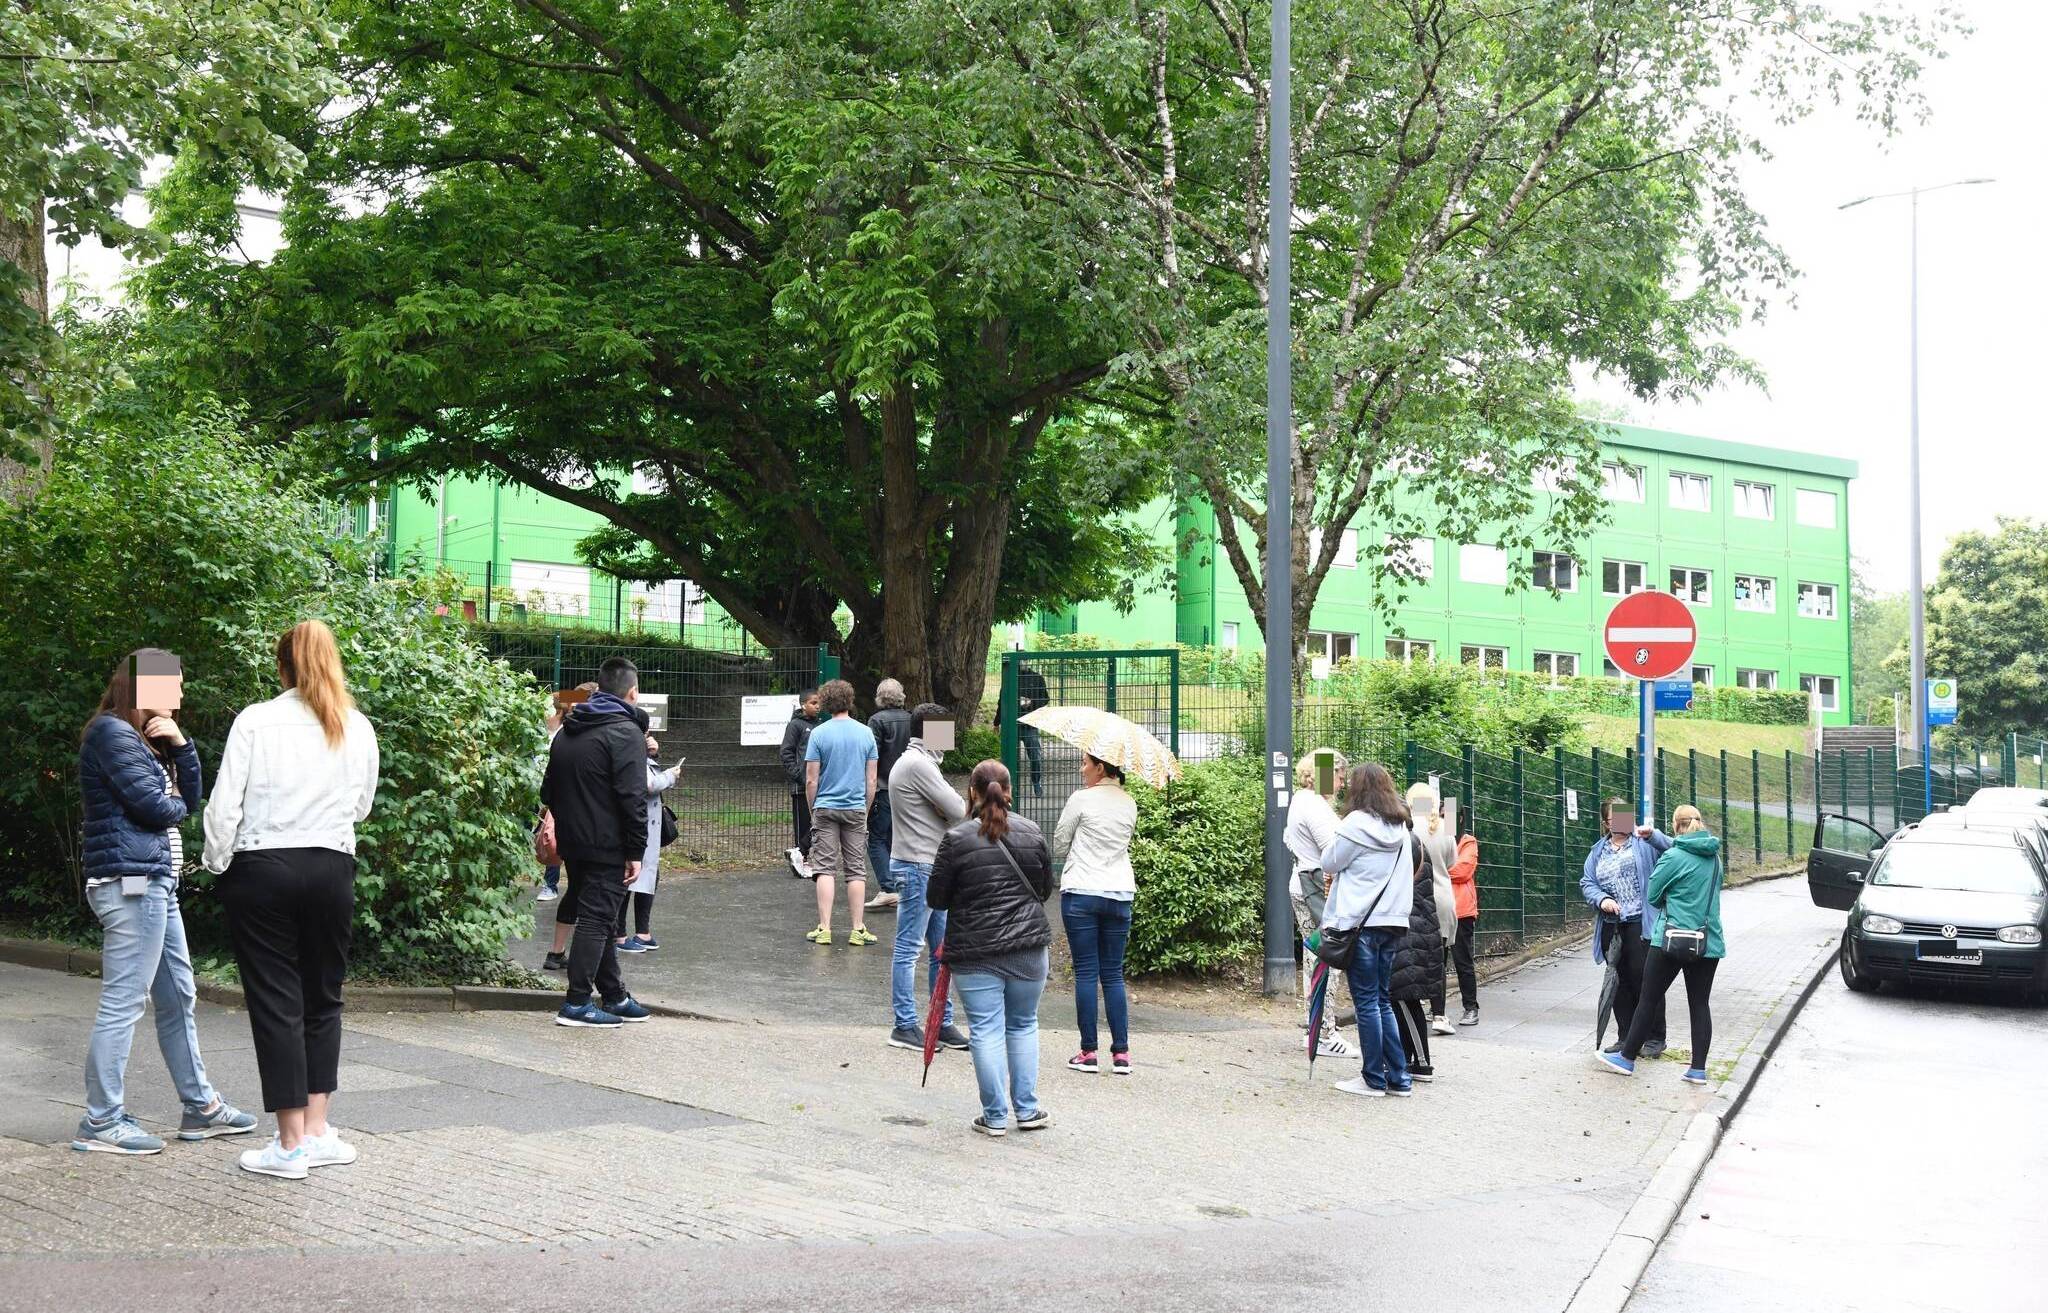 Grundschule Peterstraße: Erste Testergebnisse negativ